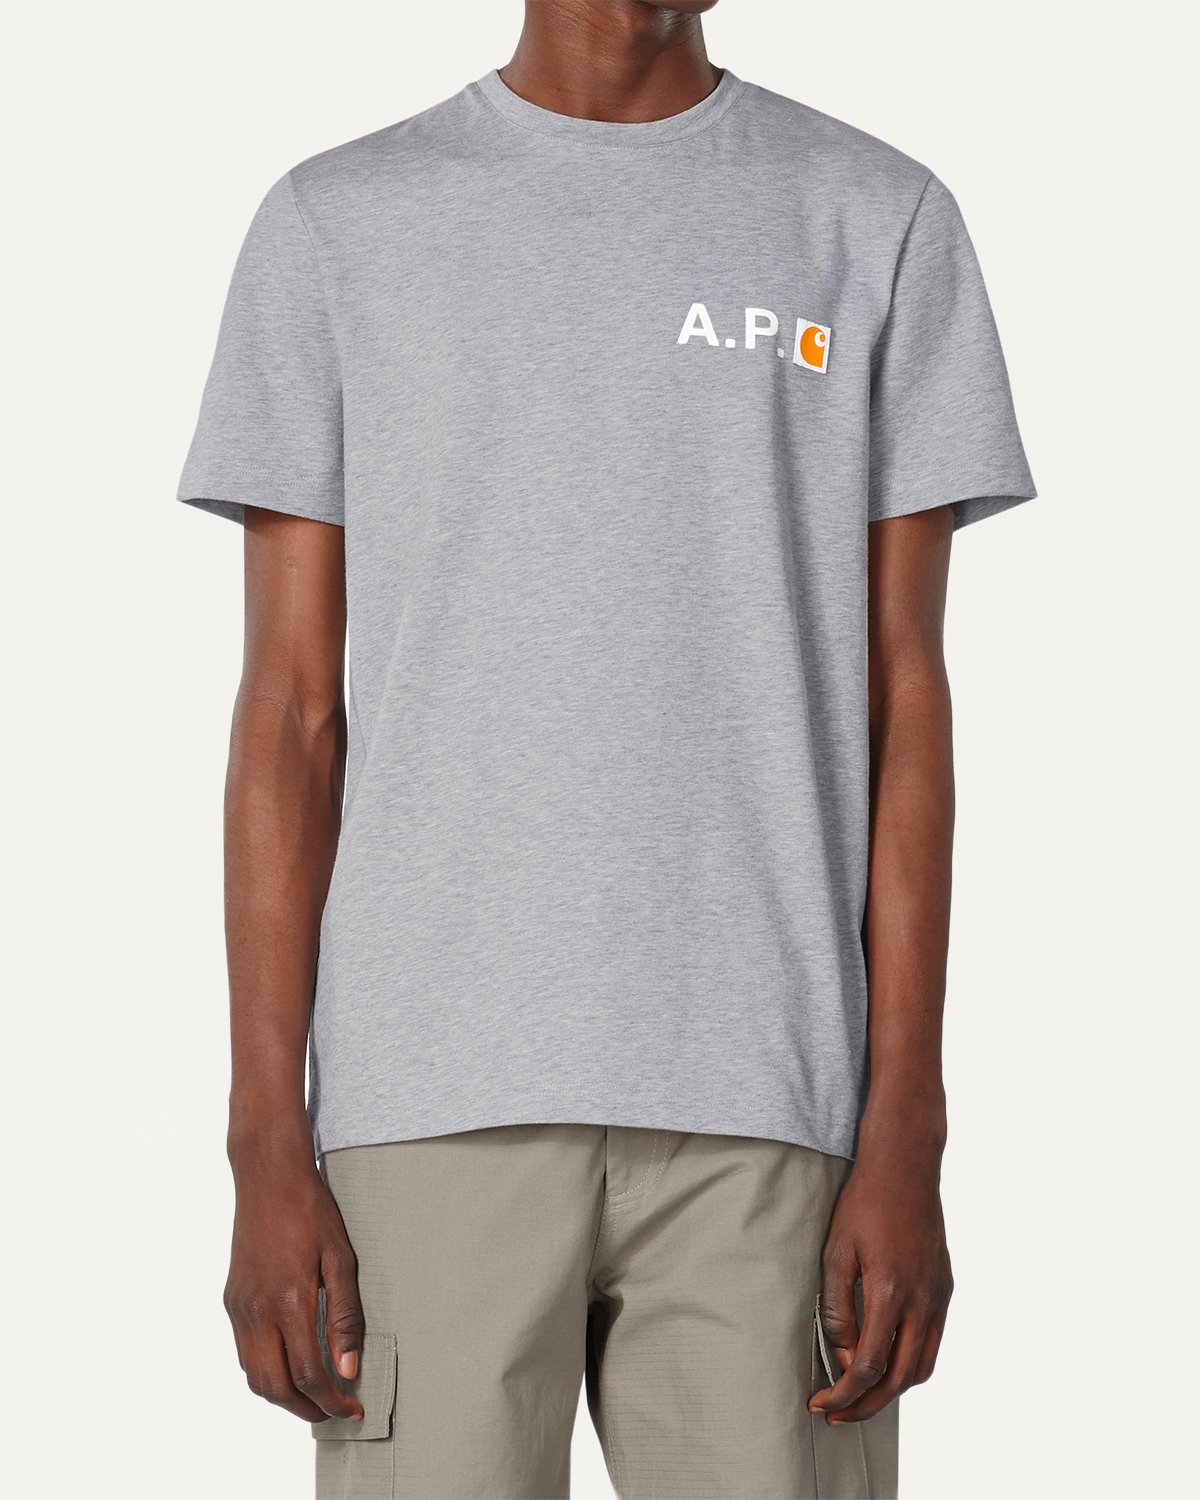 A.P.C. x Carhartt WIP - Fire T-Shirt Grey - Tops - Grey - Image 2